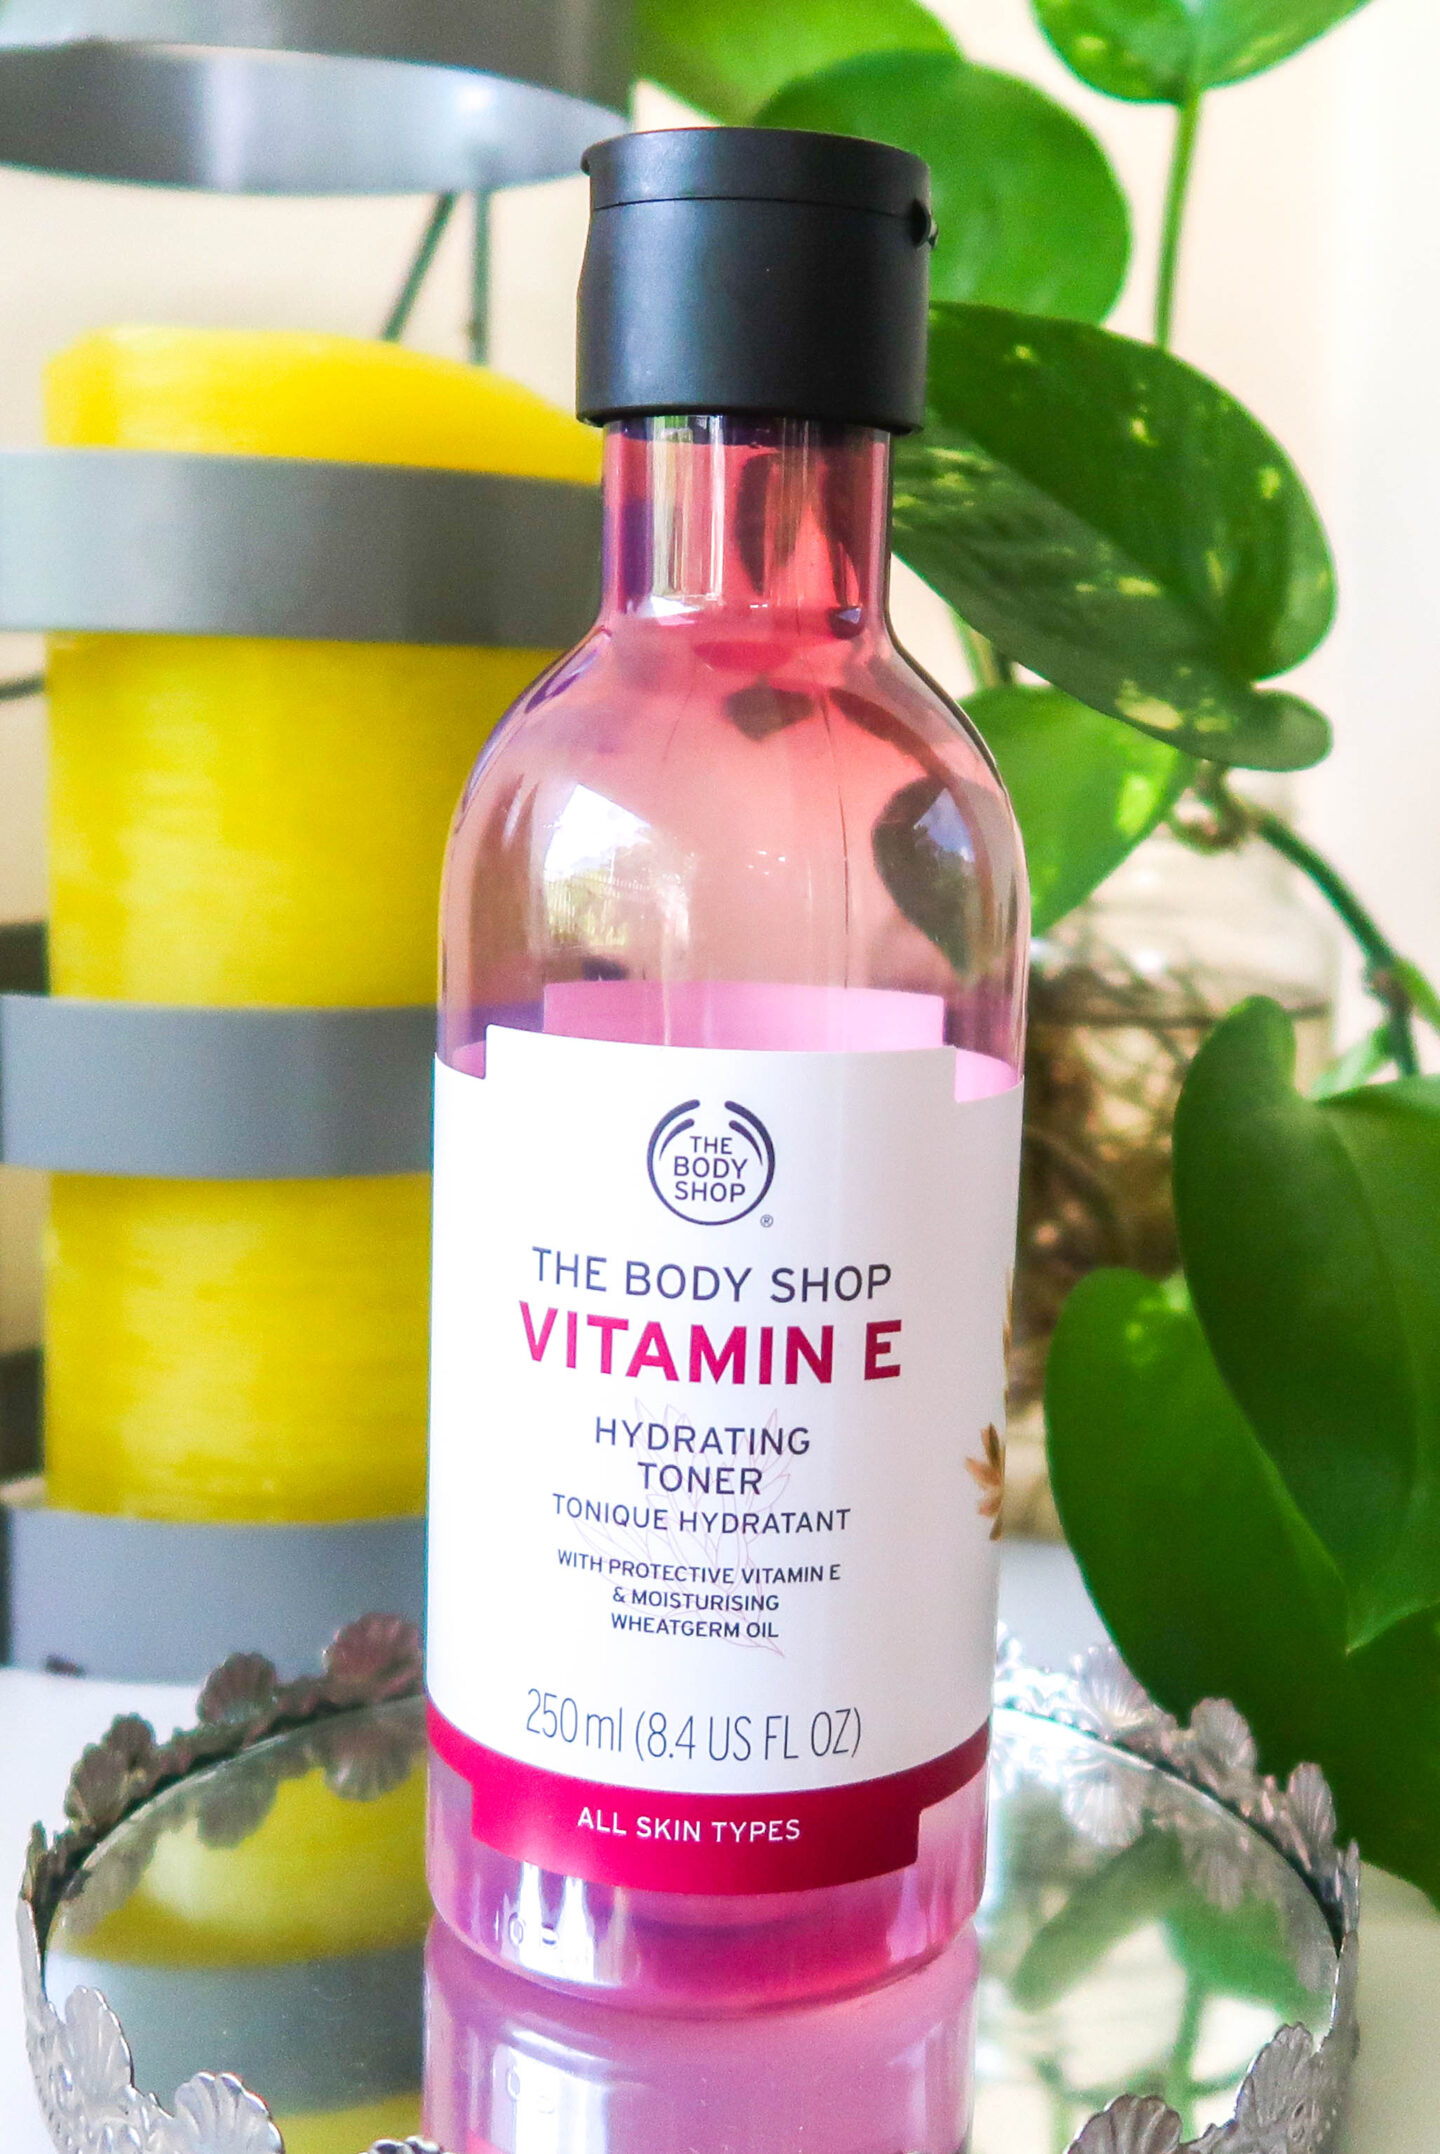 The Body Shop Vitamin E hydrating toner